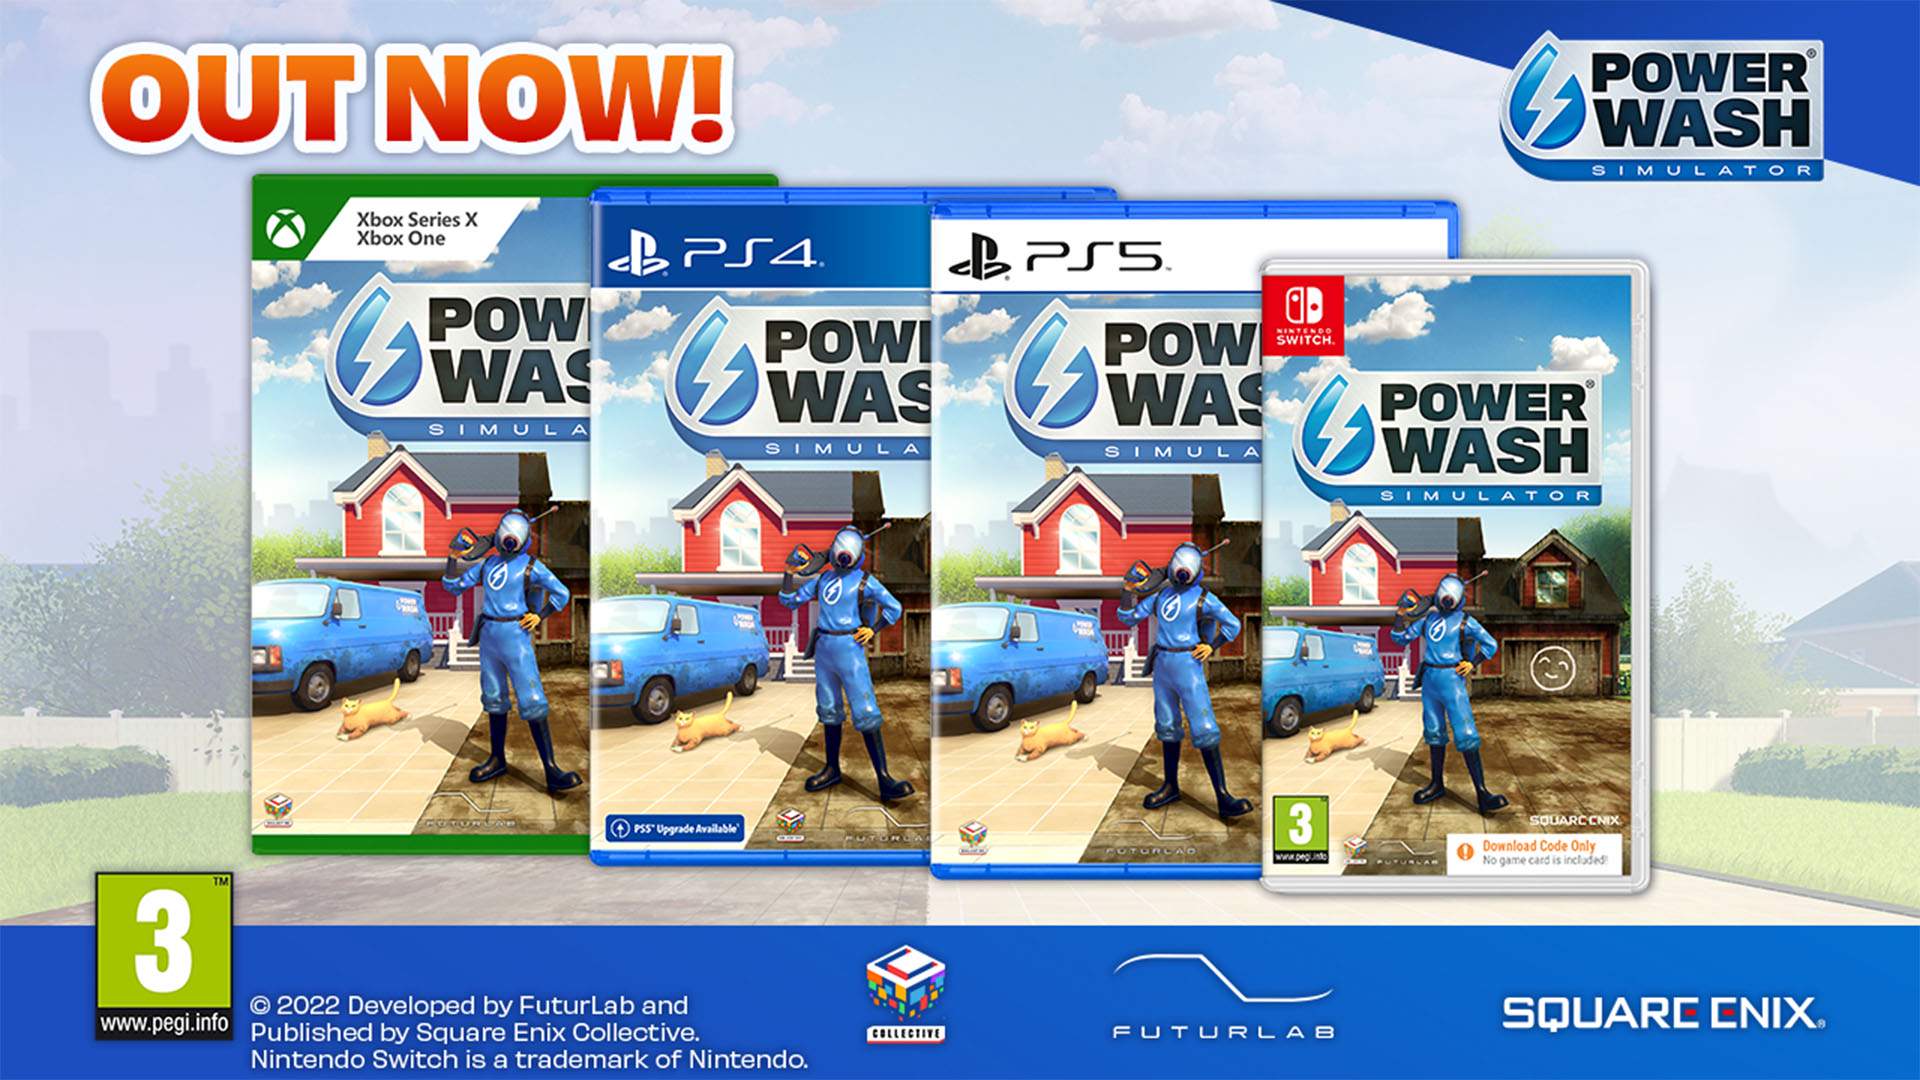 PowerWash Simulator PS4 Version Full Game Setup Free Download